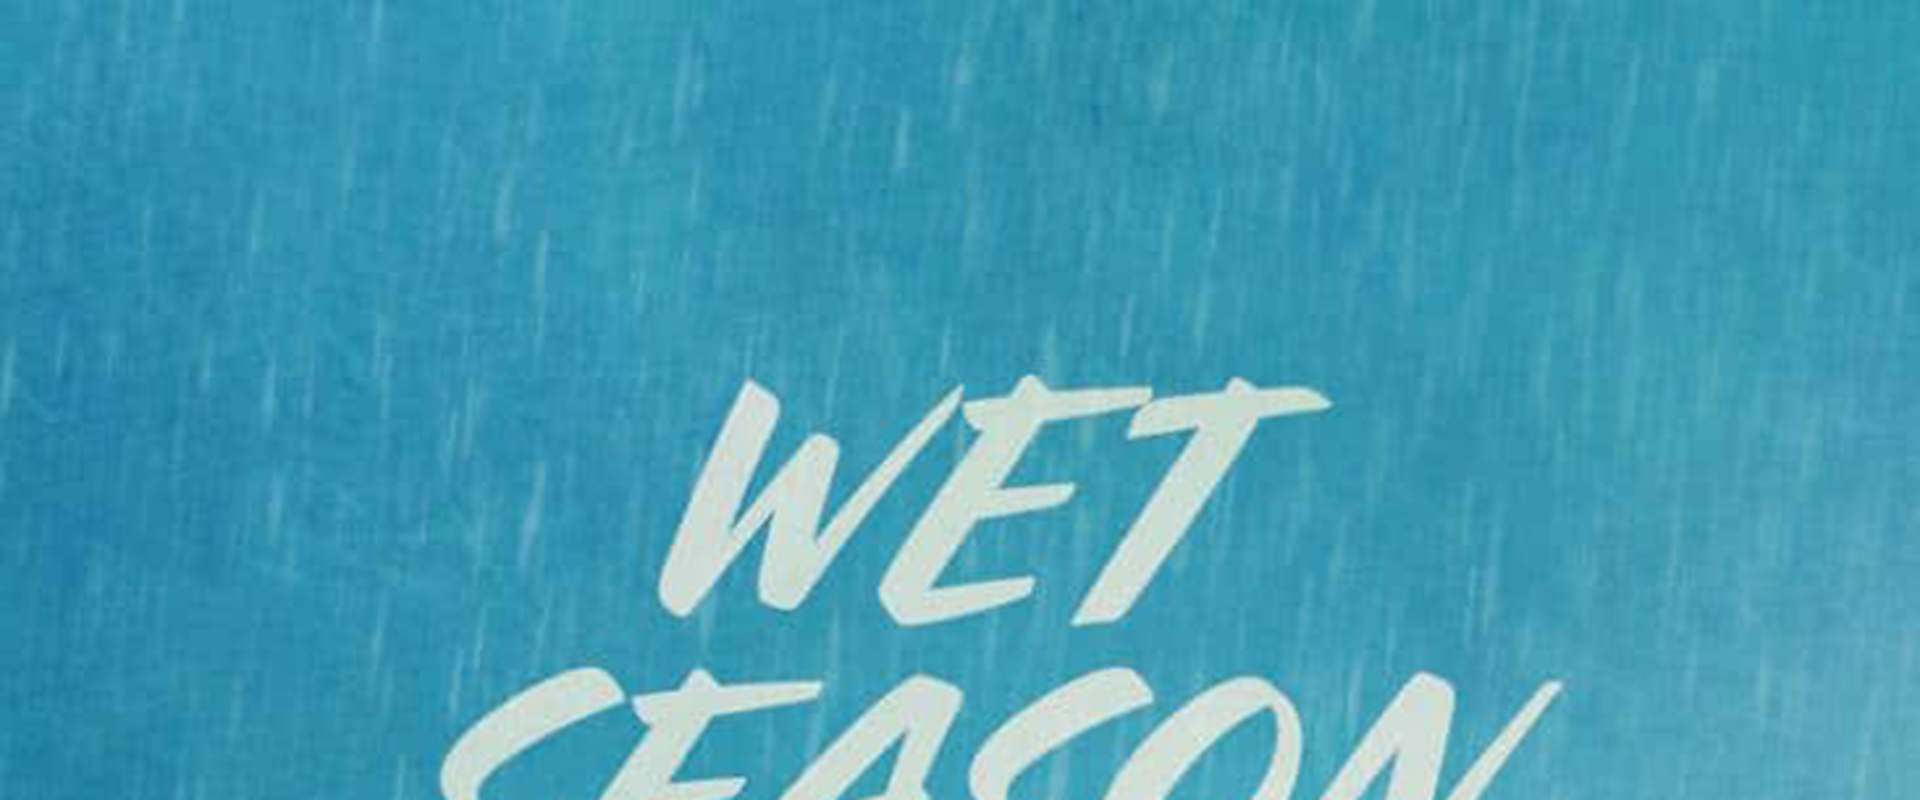 Wet Season background 1